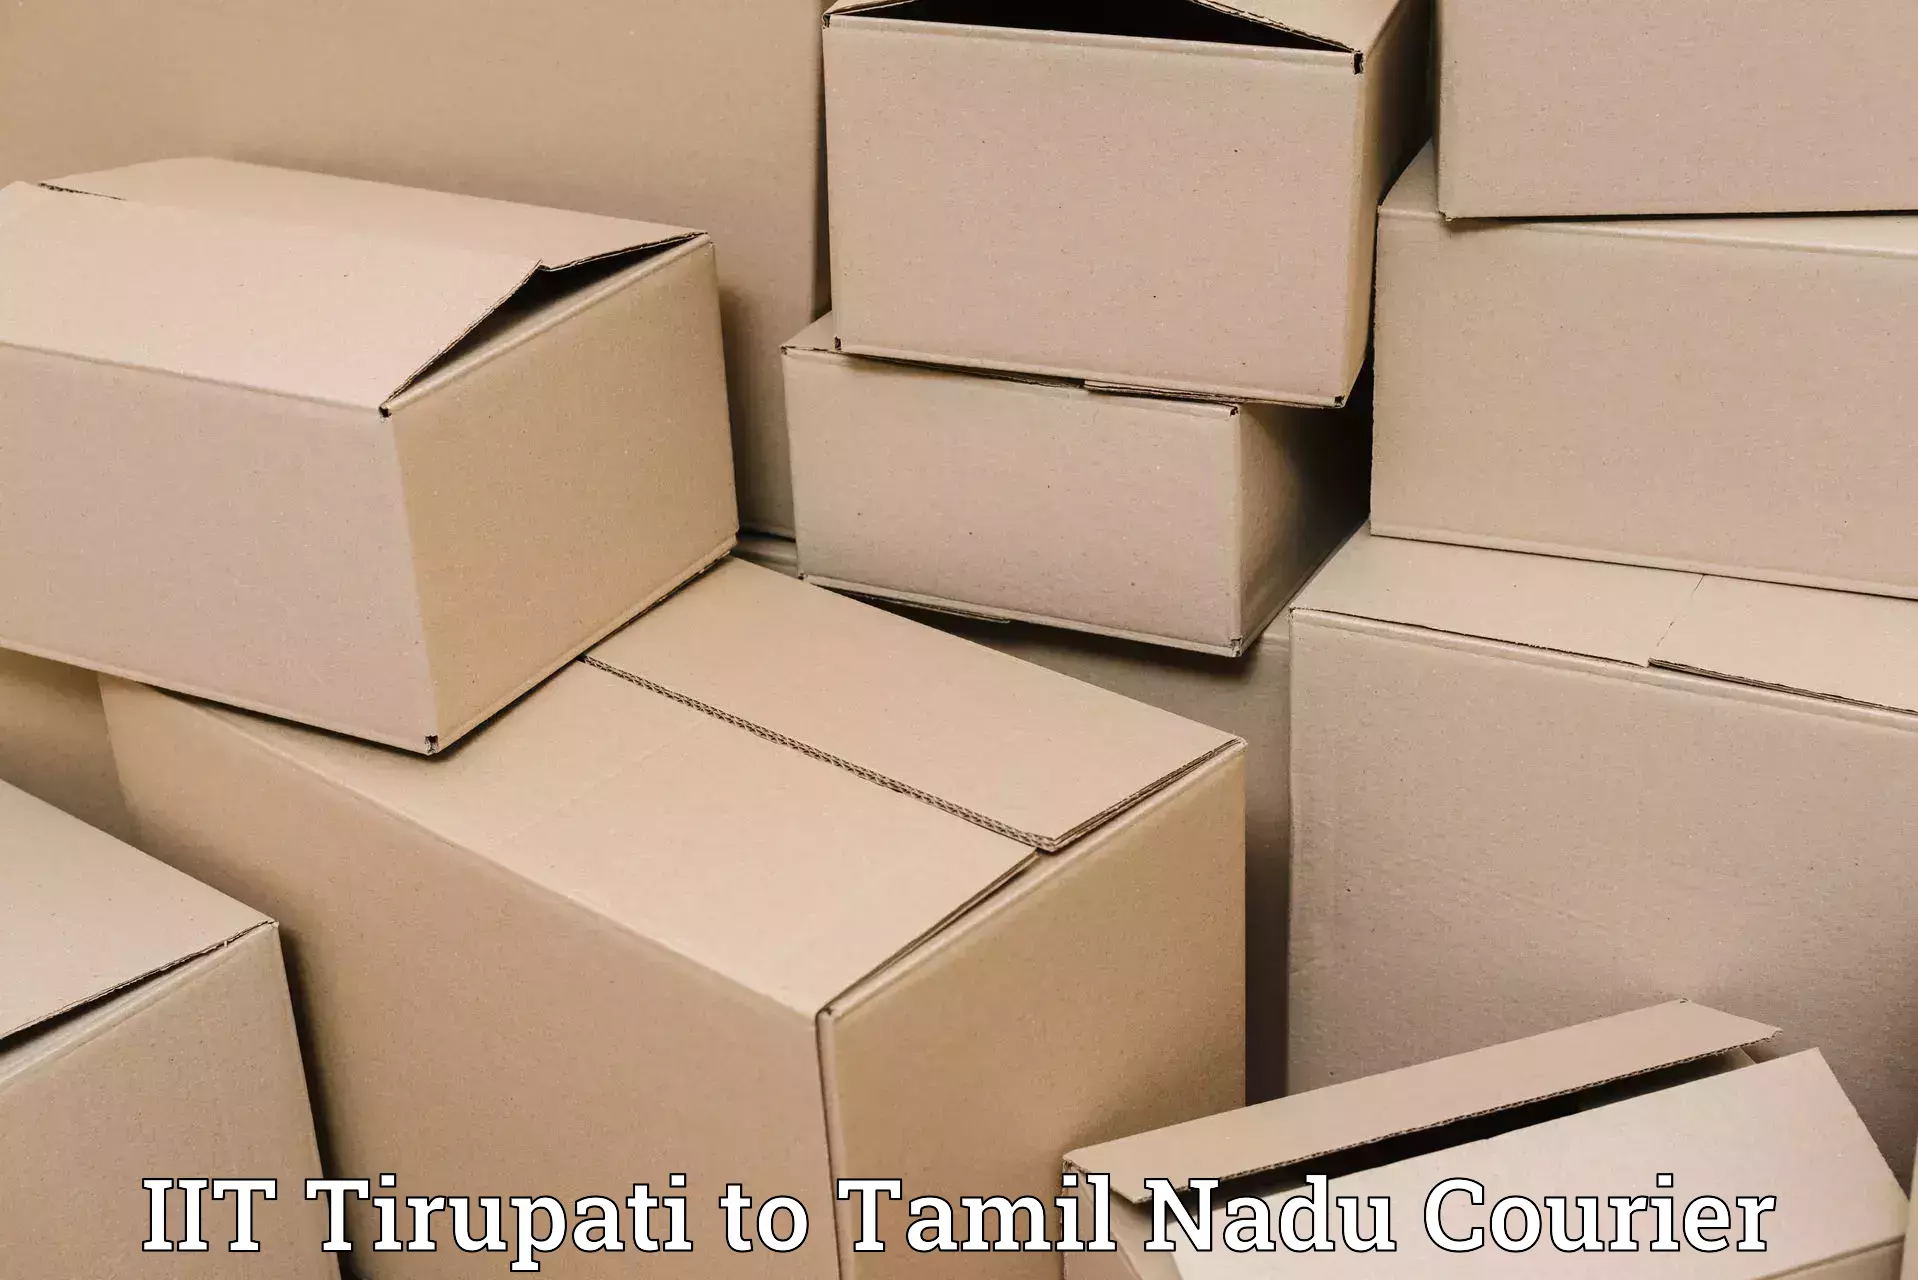 Affordable parcel service IIT Tirupati to Cuddalore